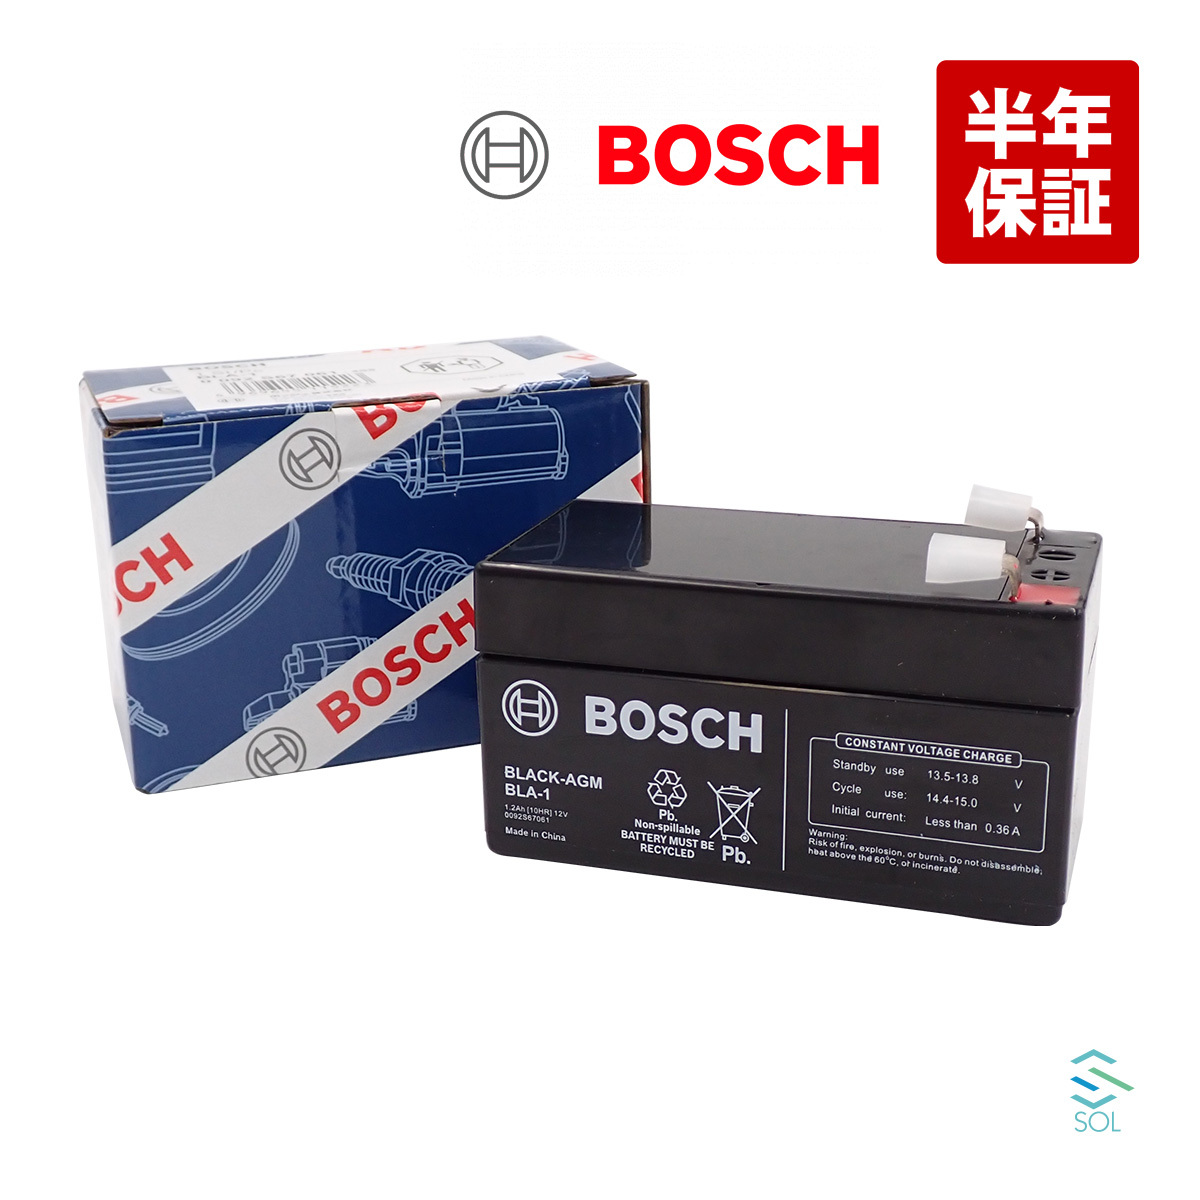 BOSCH製 ベンツ 補機バッテリー サブバッテリー BLA-1 12V 1.2Ah BLACK-AGM バックアップバッテリー Eクラス W212 R230 X204_画像1